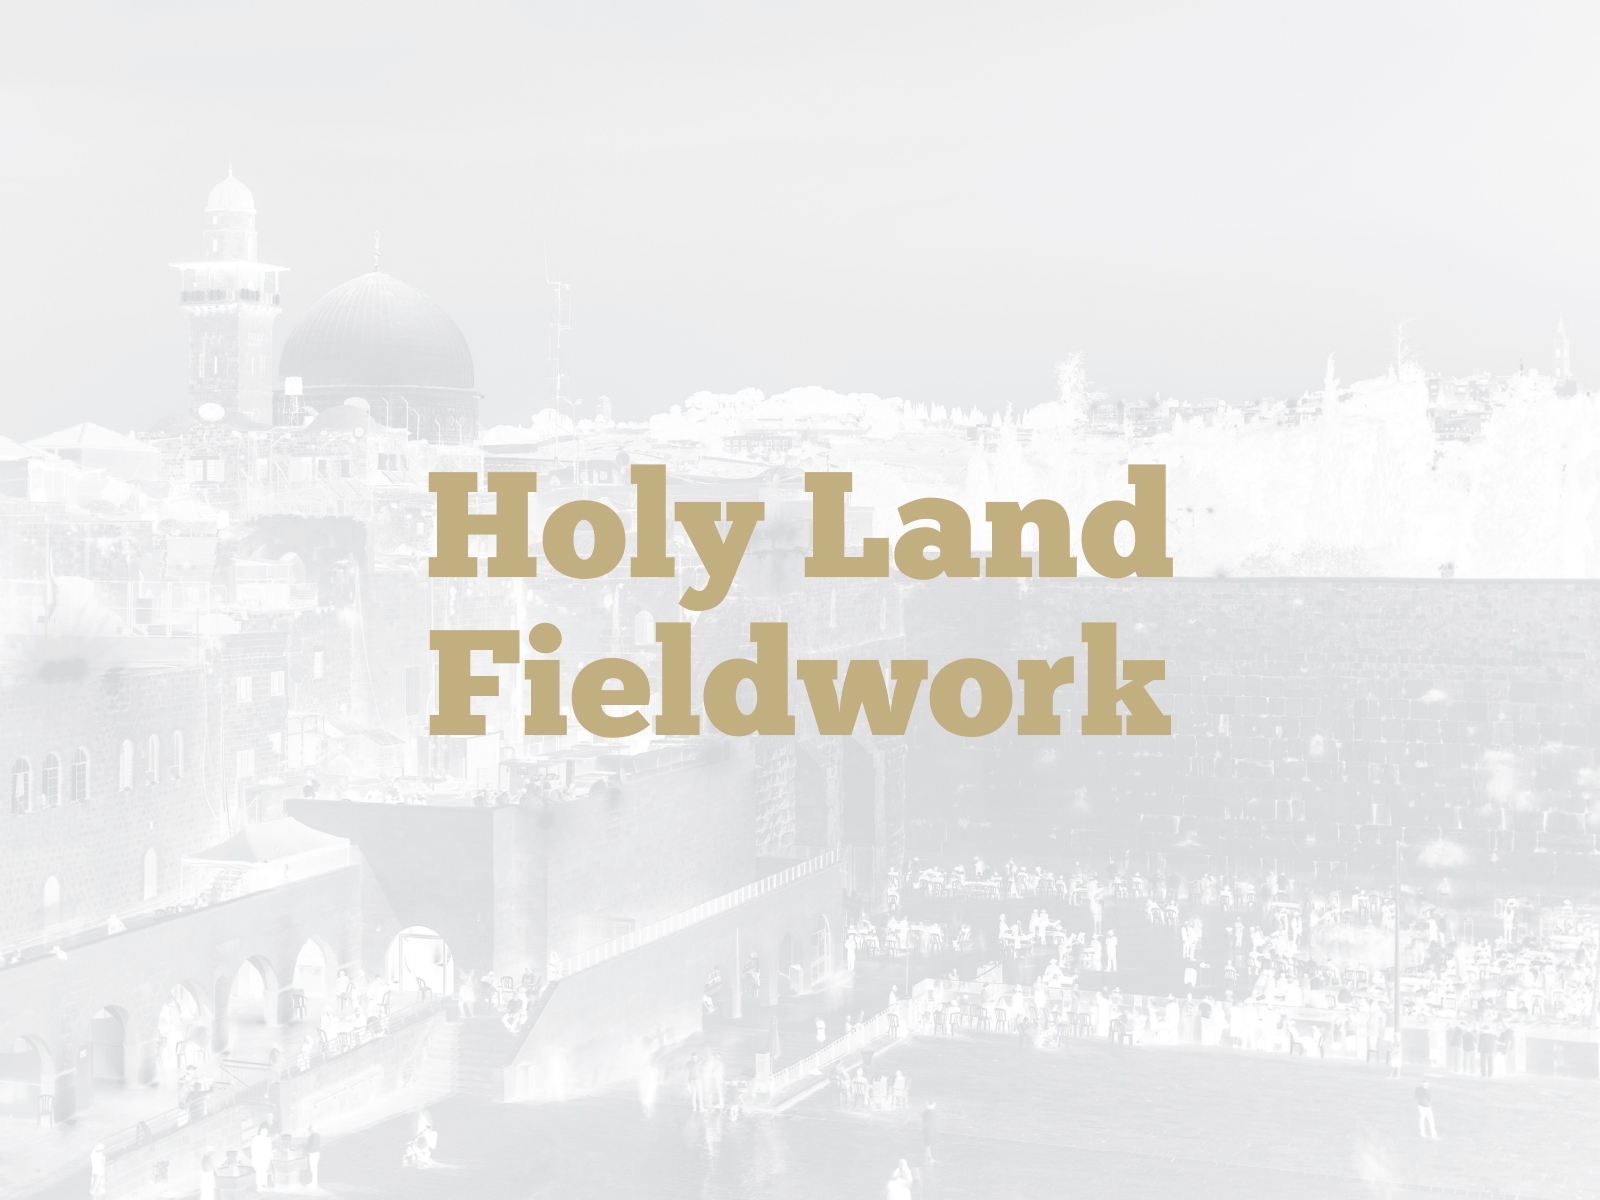 holy land fieldwork